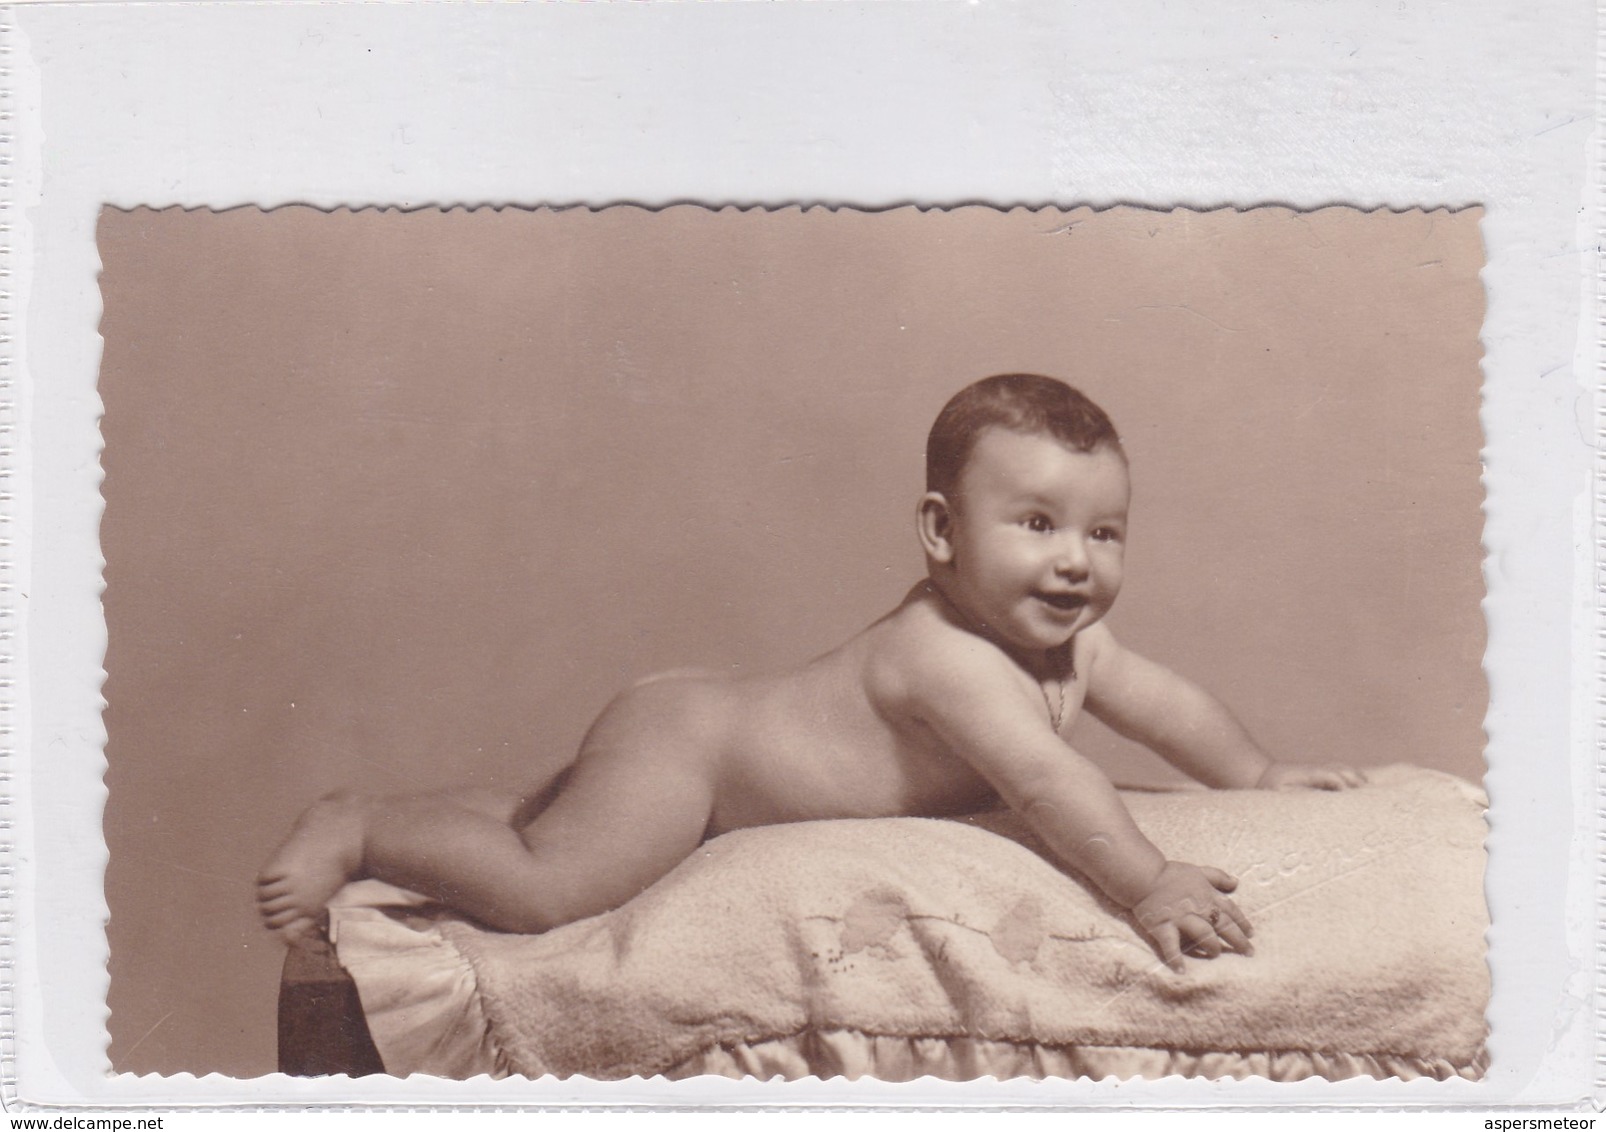 LITTLE PEQUEÑO BEBE BABY DESNUDO NUDE NU -CIRCA 1930s- BLEUP - Fotografie